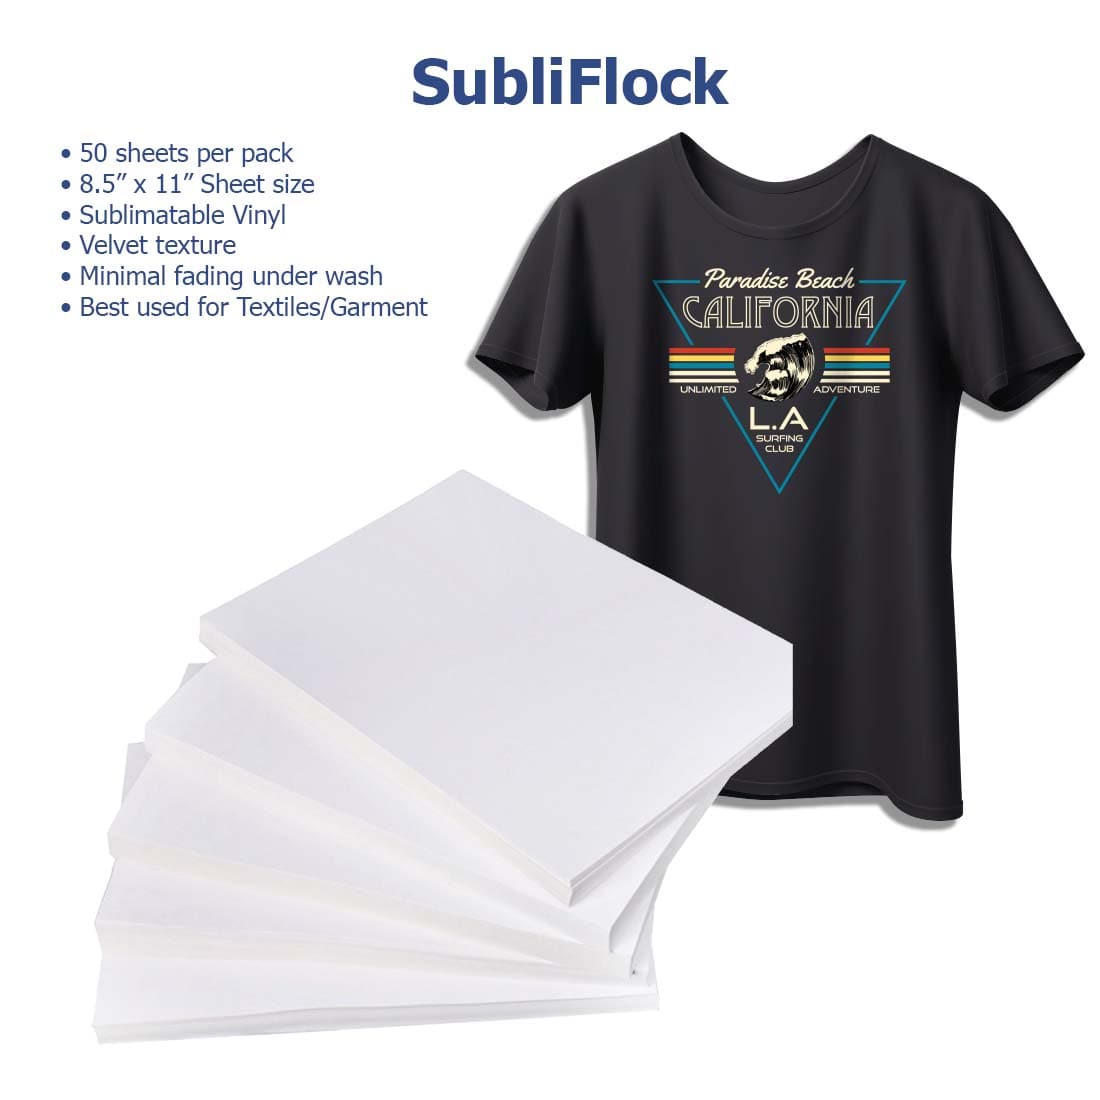 MultiPrint™ SubliFlock Printable Heat Transfer Vinyl - Joto Imaging Supplies US